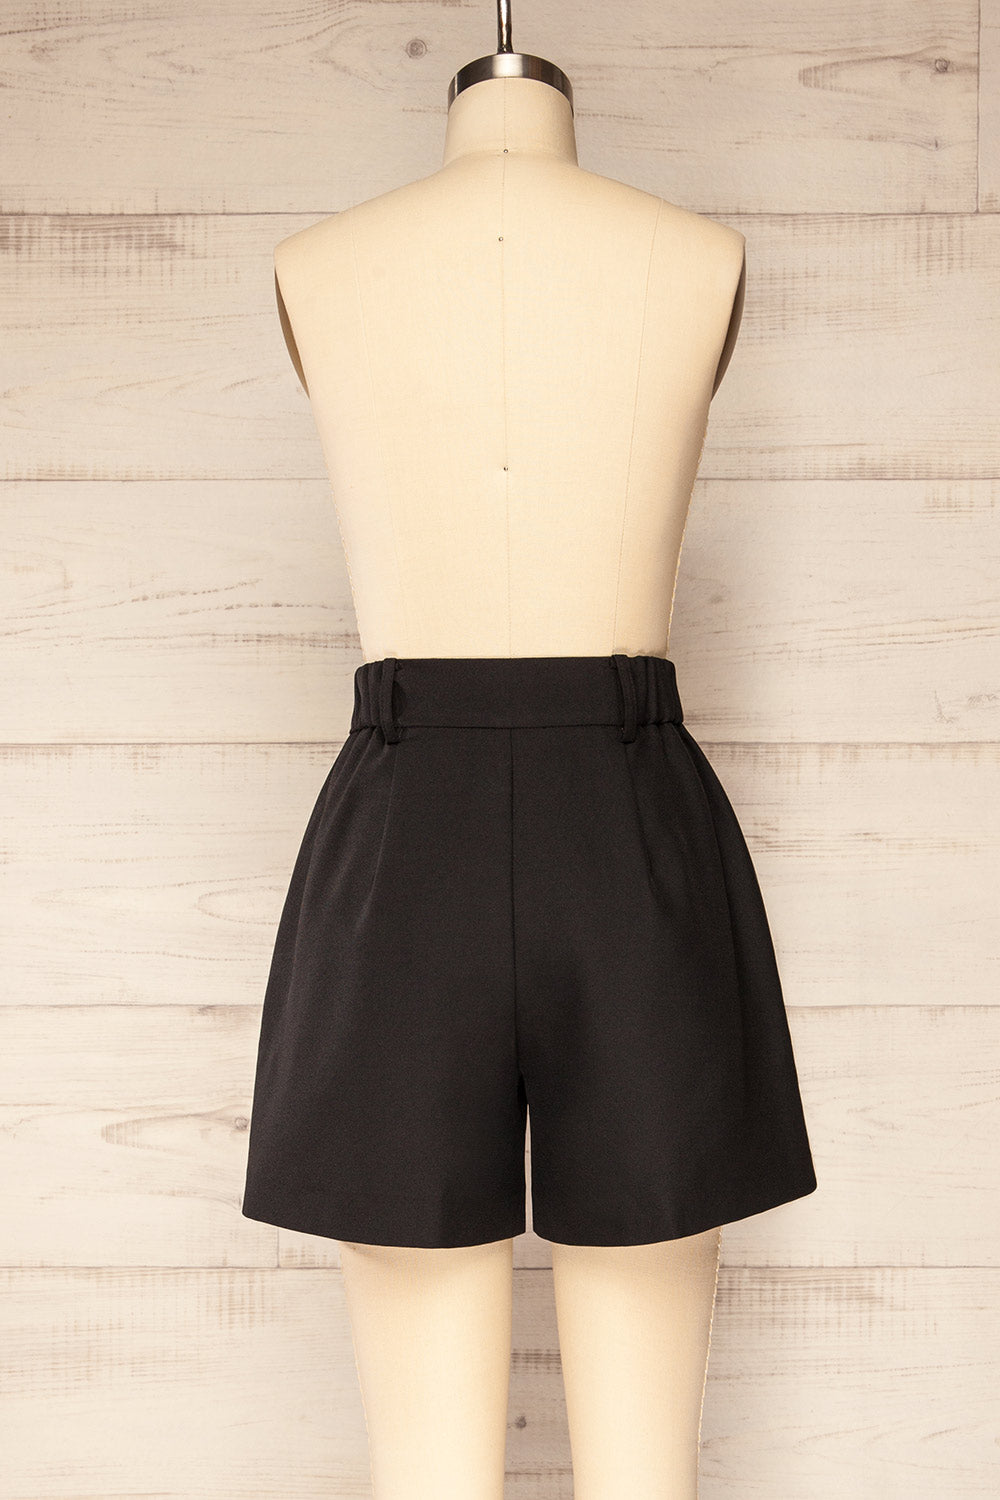 Kunga Black High-Waisted Shorts w/ Pockets | La petite garçonne back view 